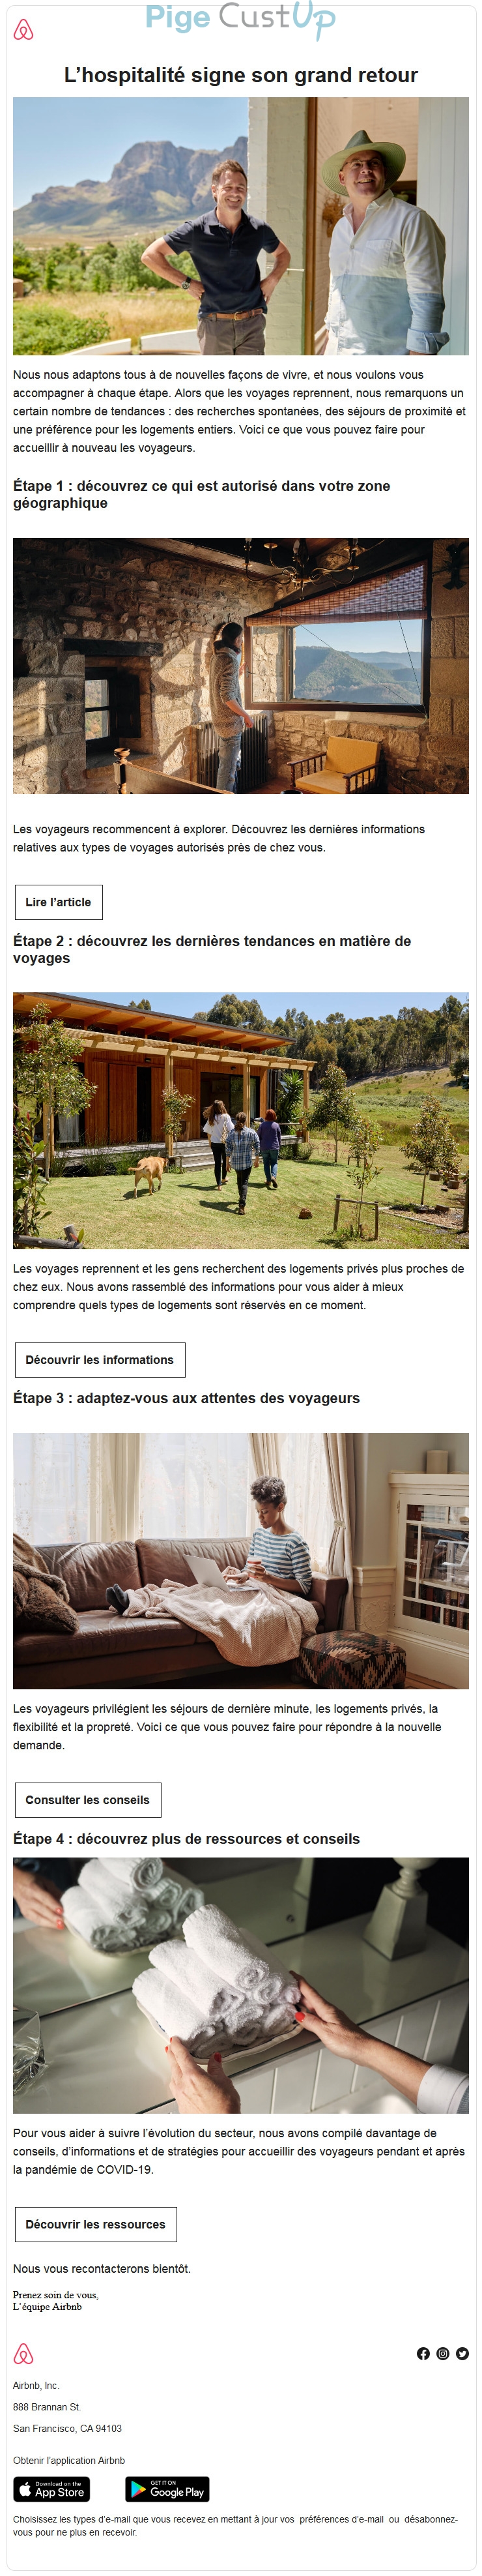 Exemple de Type de media  e-mailing - Airbnb - Marketing relationnel - Newsletter